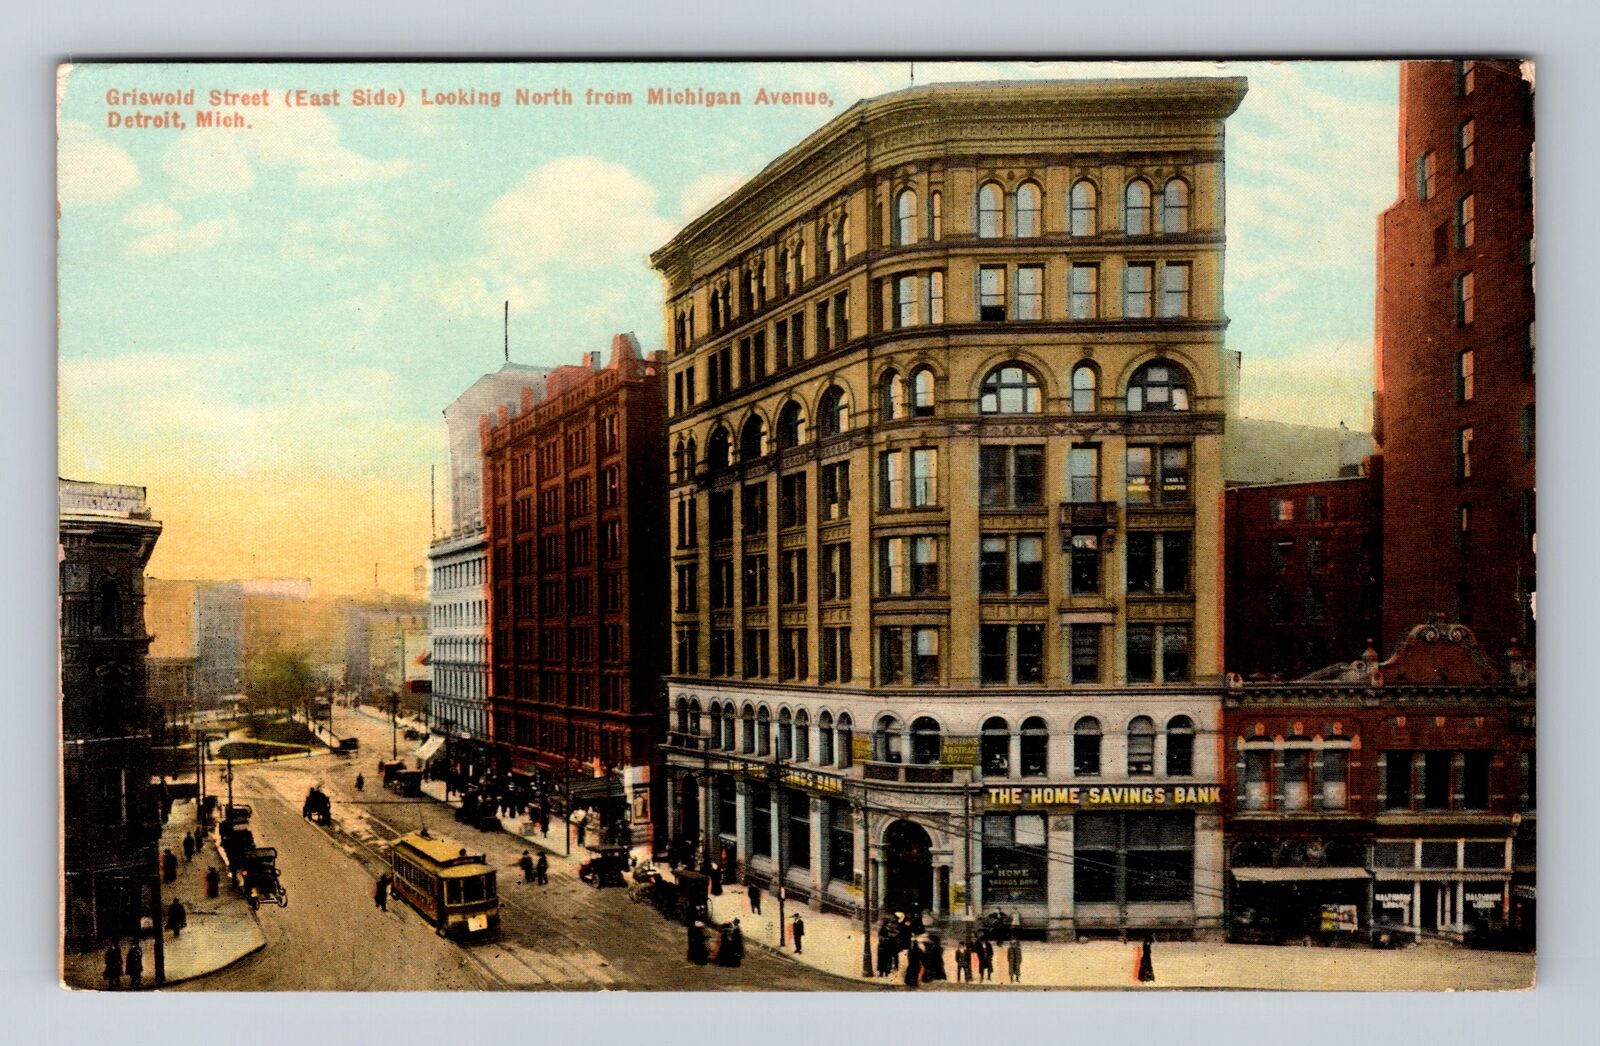 Detroit MI-Michigan, Griswold Street Looking North, Bank, Vintage Postcard